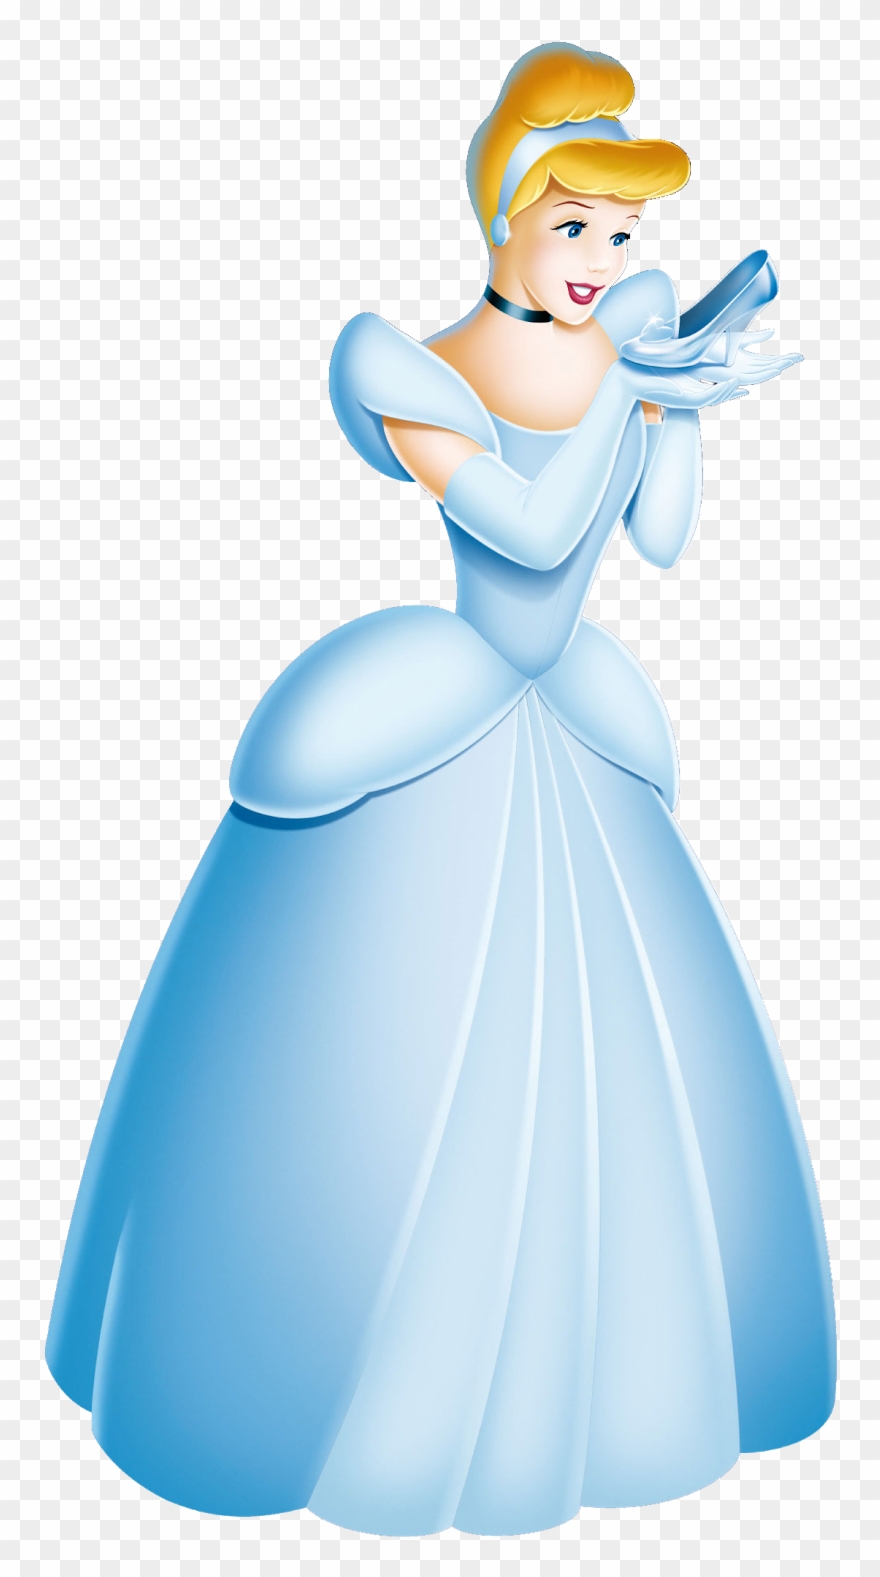 Cinderella clipart disney.